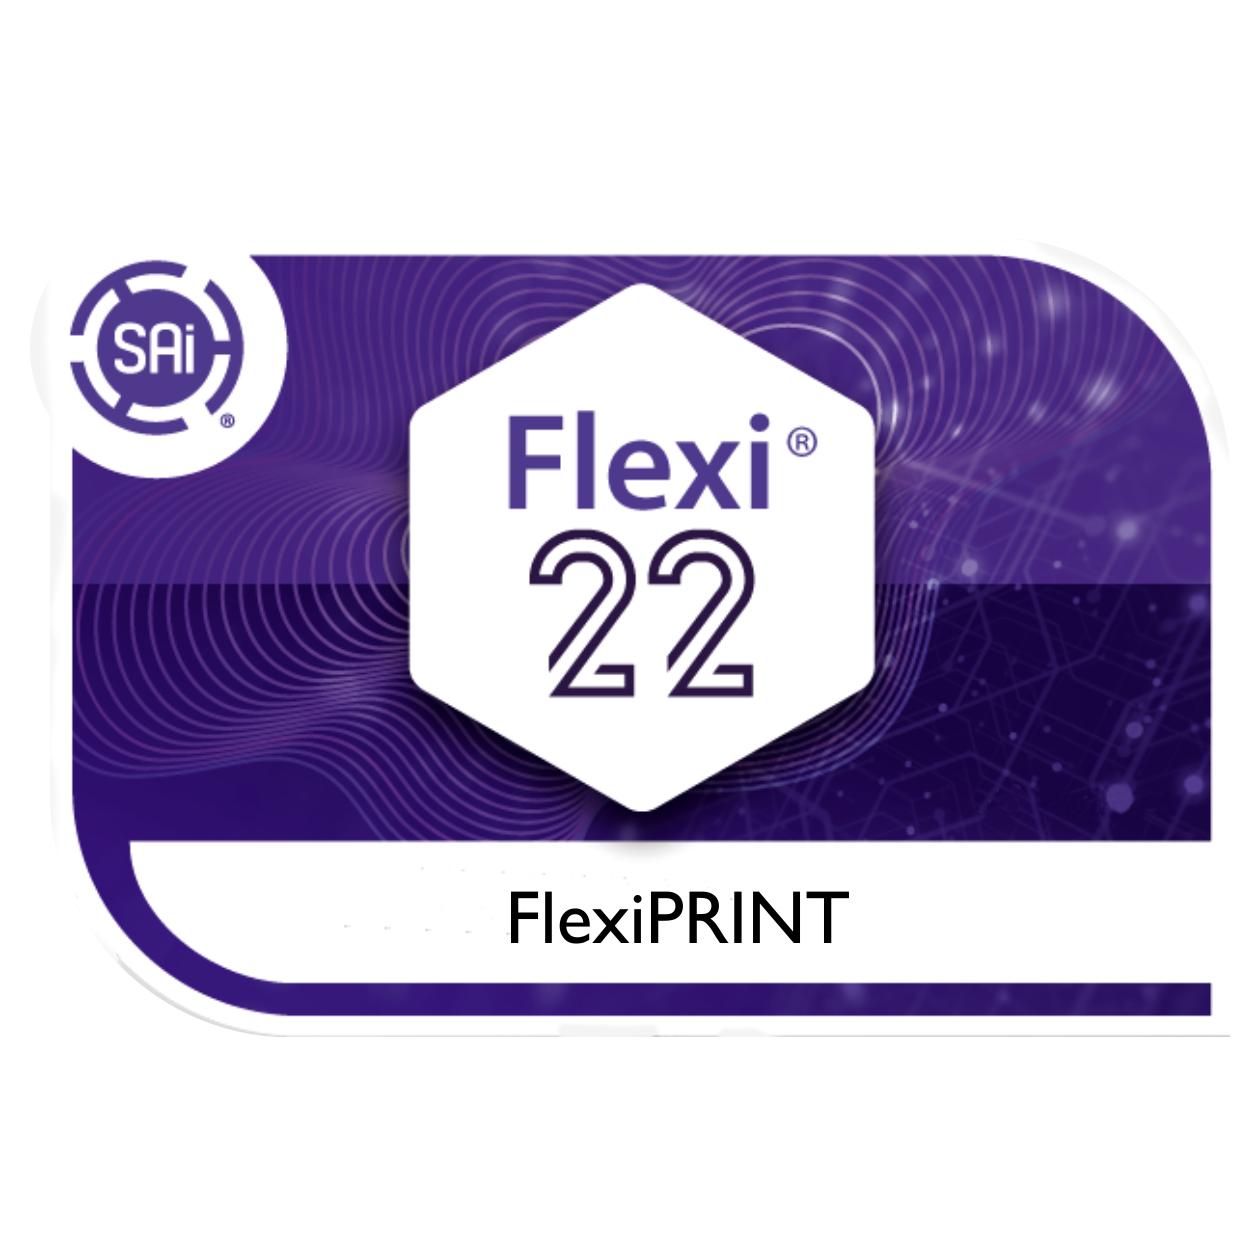 FlexiPRINT Software v22